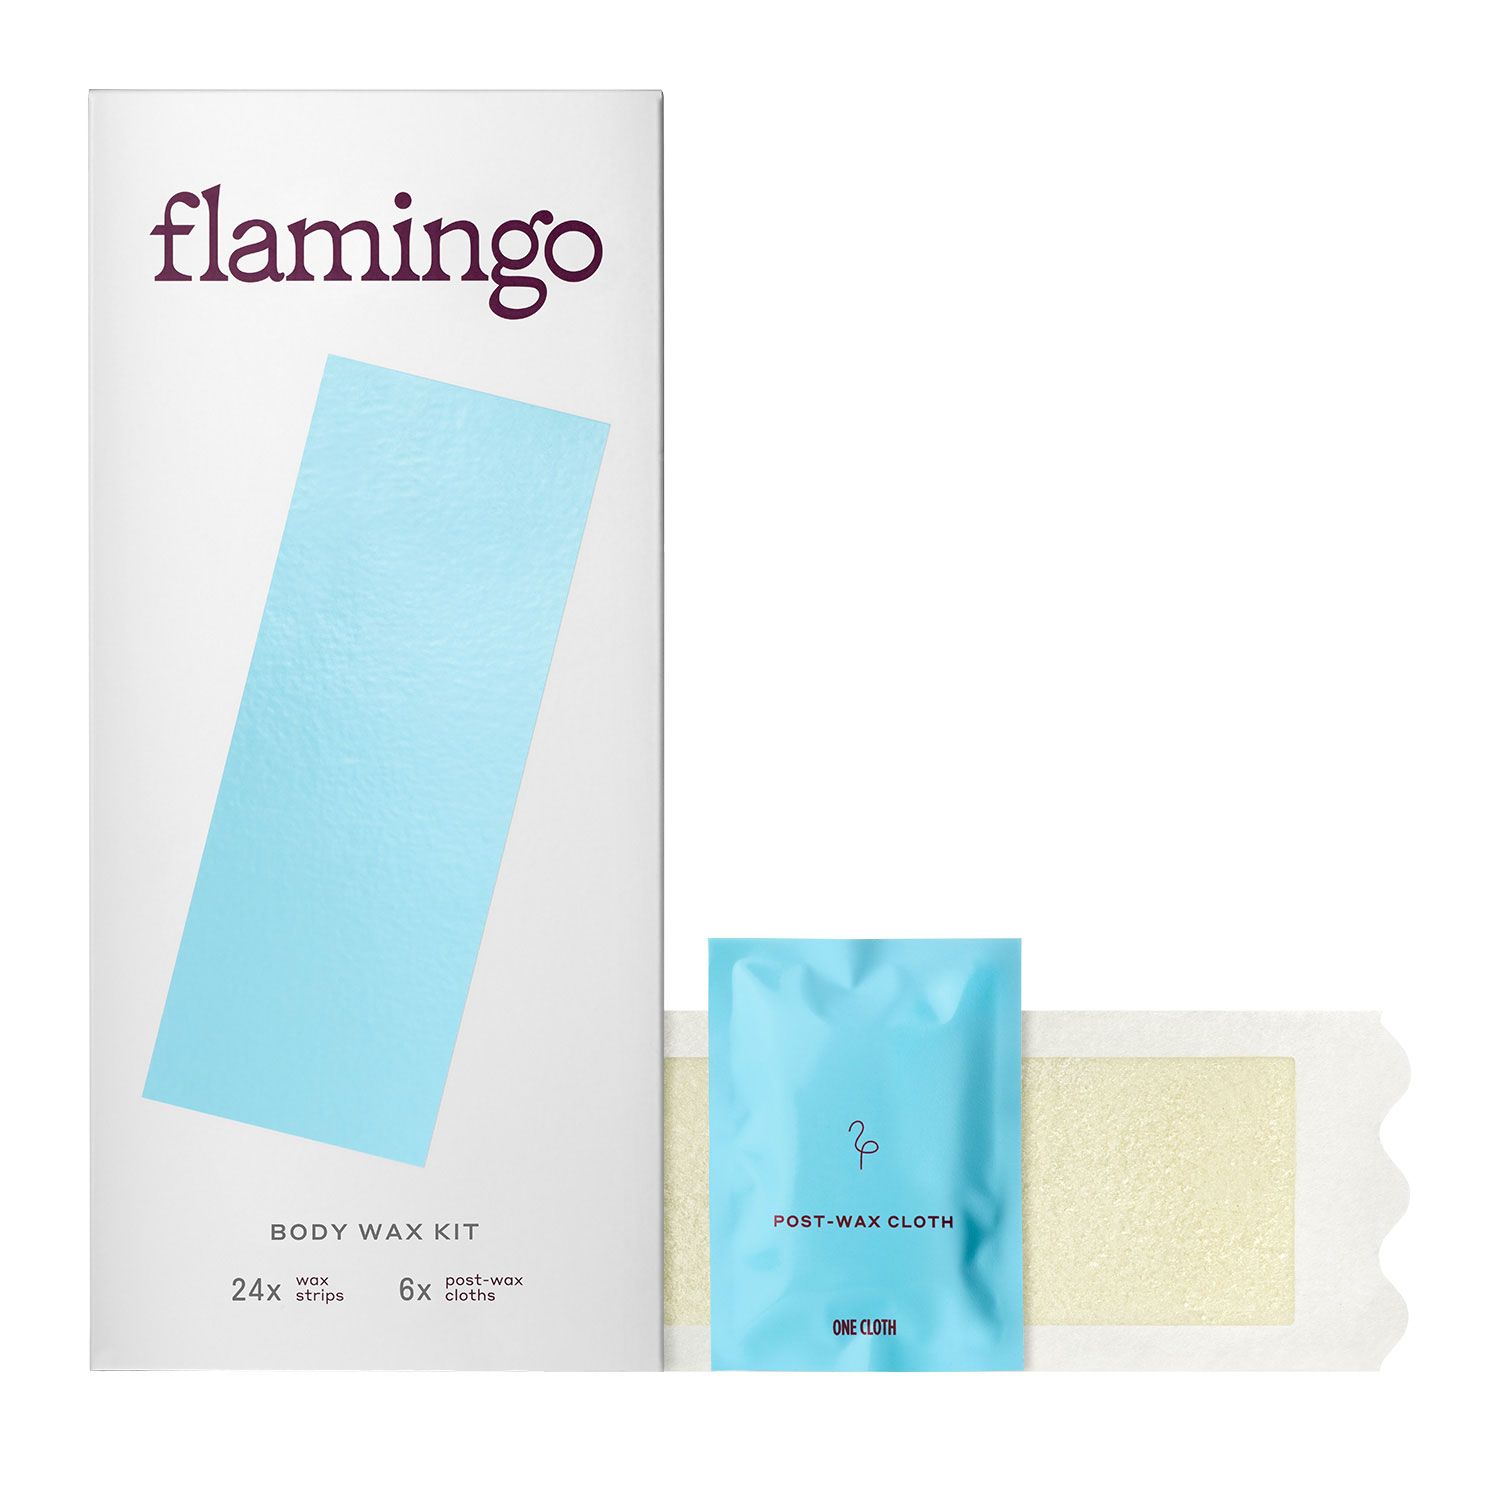 Bedste hårfjerningsprodukter: Flamingo Body Wax Kit